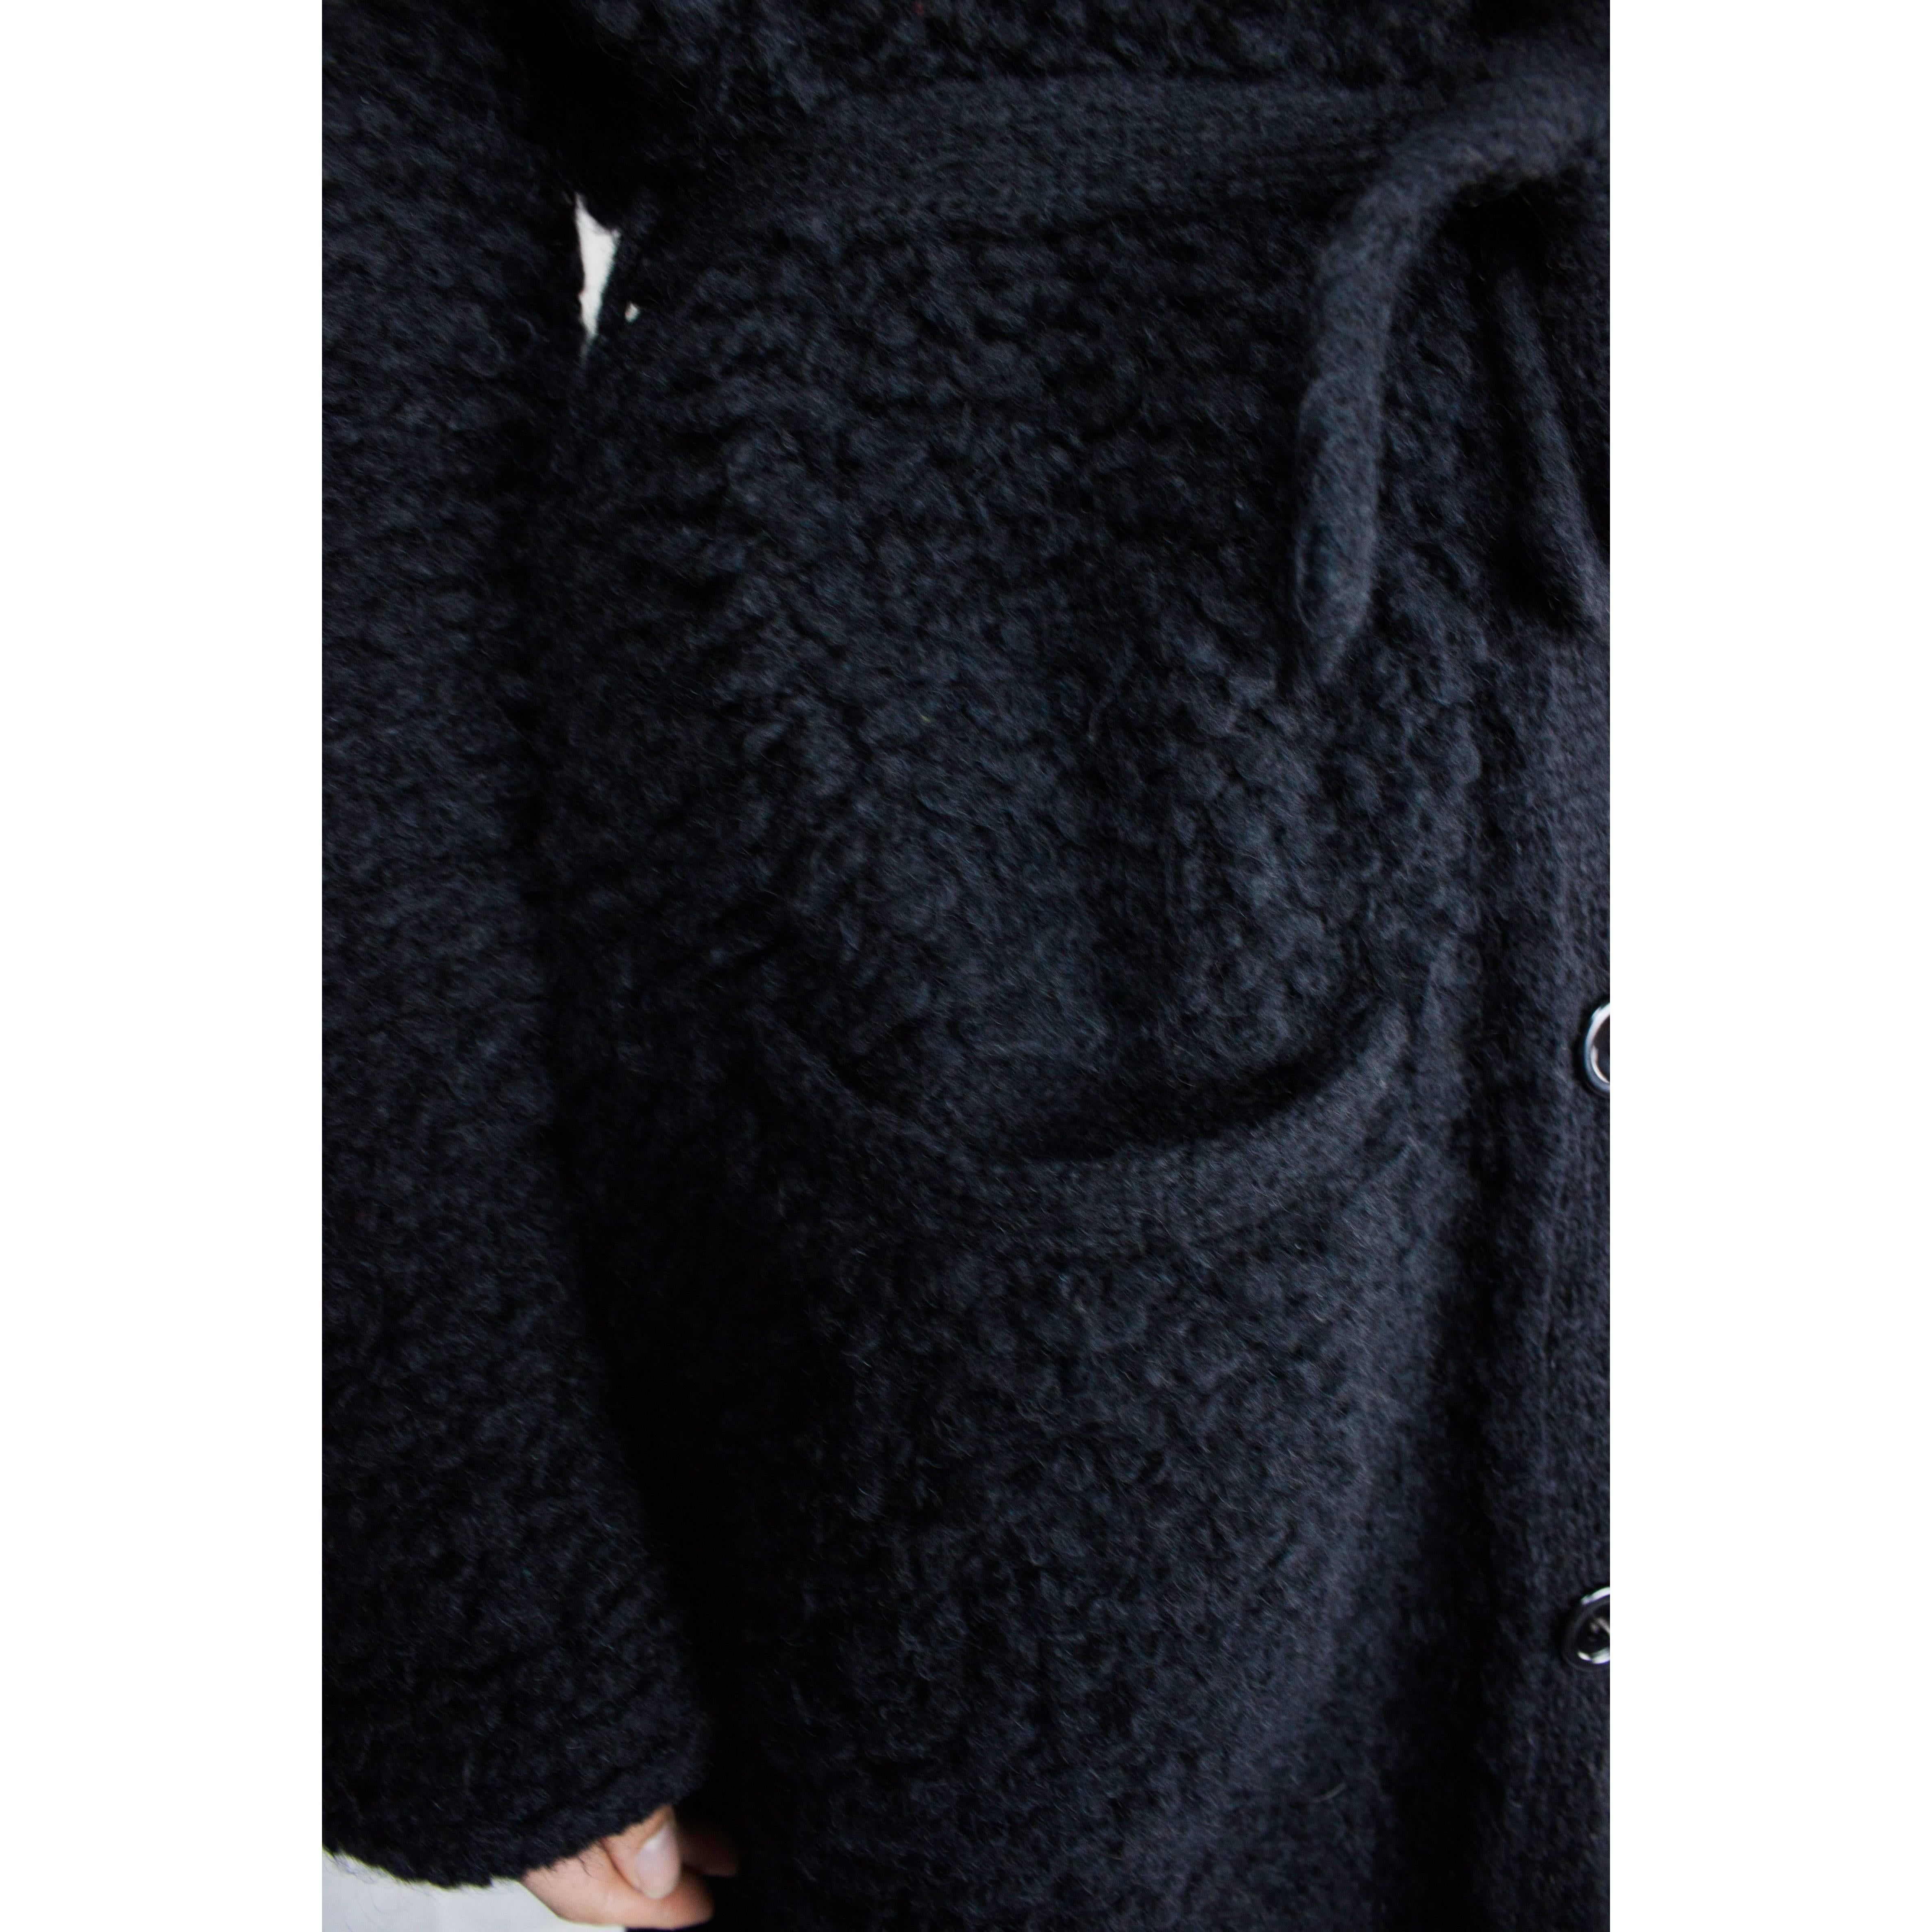 Sonia Rykiel Early knitted black wool coat, circa 1960s 3